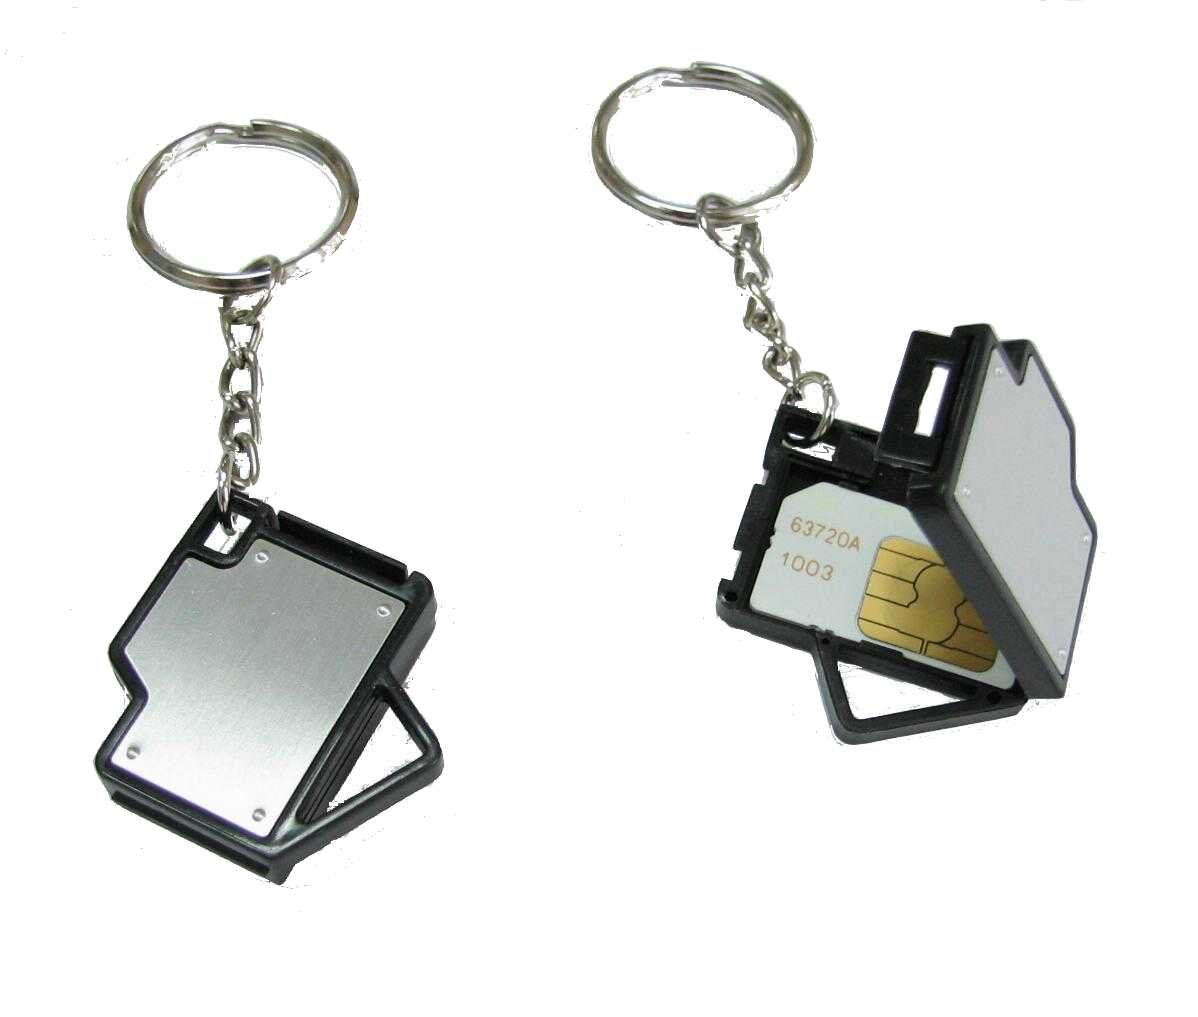  Key Chain With SIM Card Holder (Key Chain avec cartes SIM)